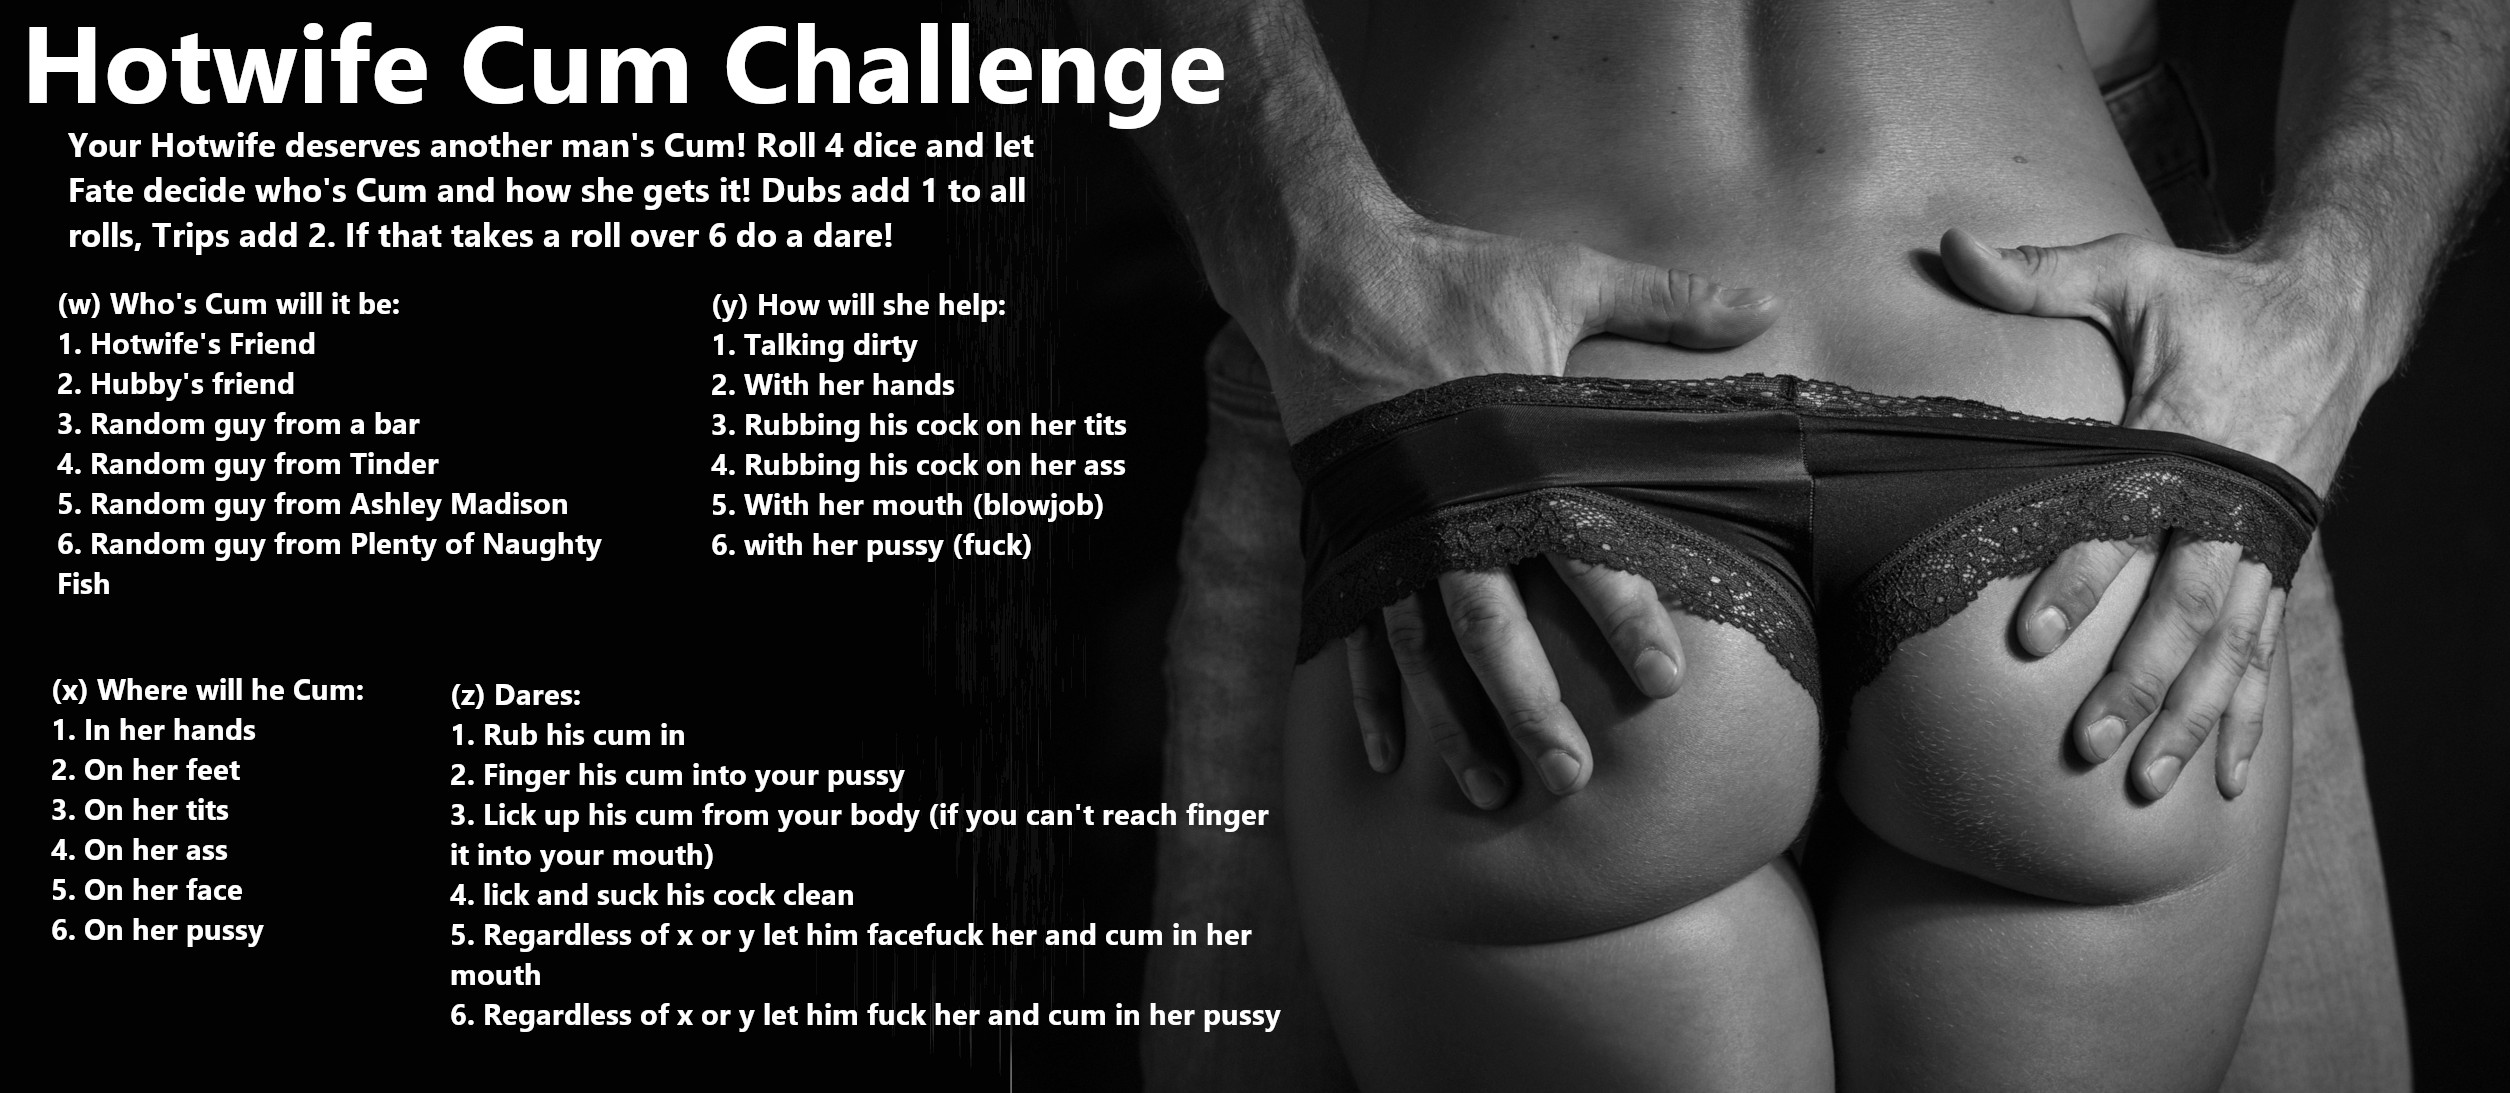 Hotwife Cum Challenge image